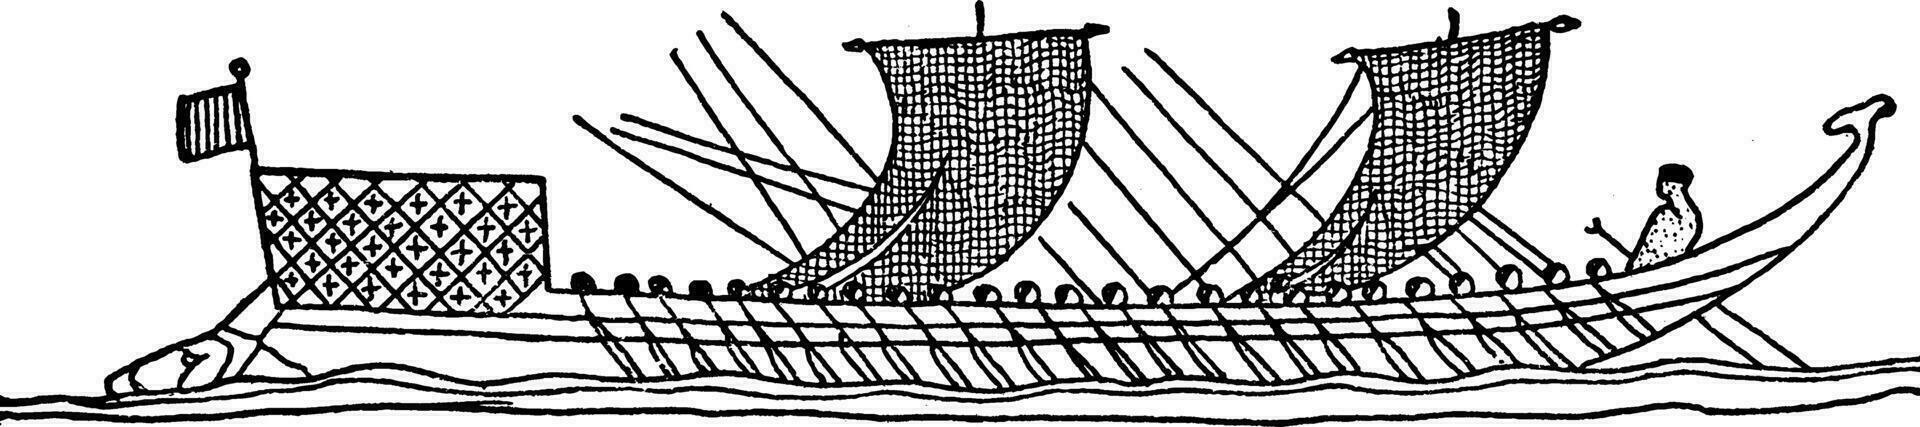 cinquenta remo grego barco, vintage ilustração. vetor